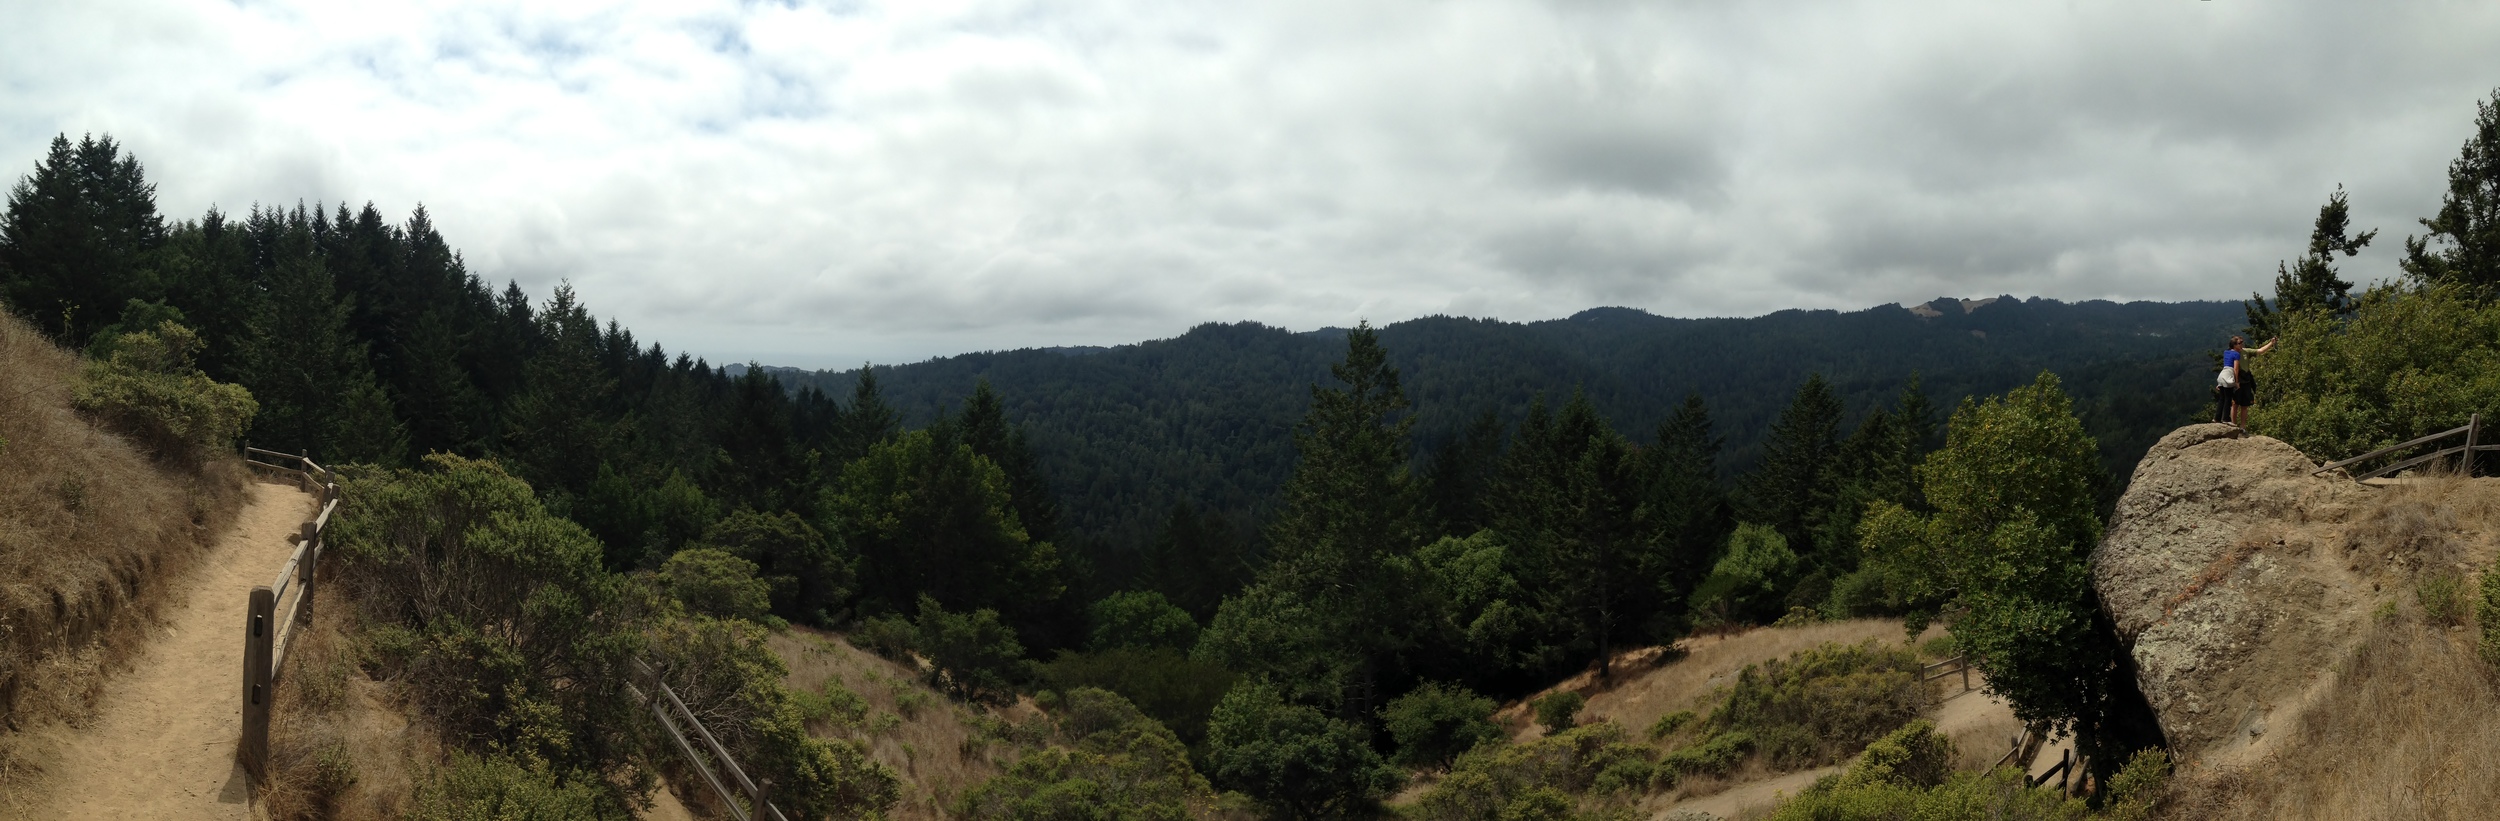 California panorama